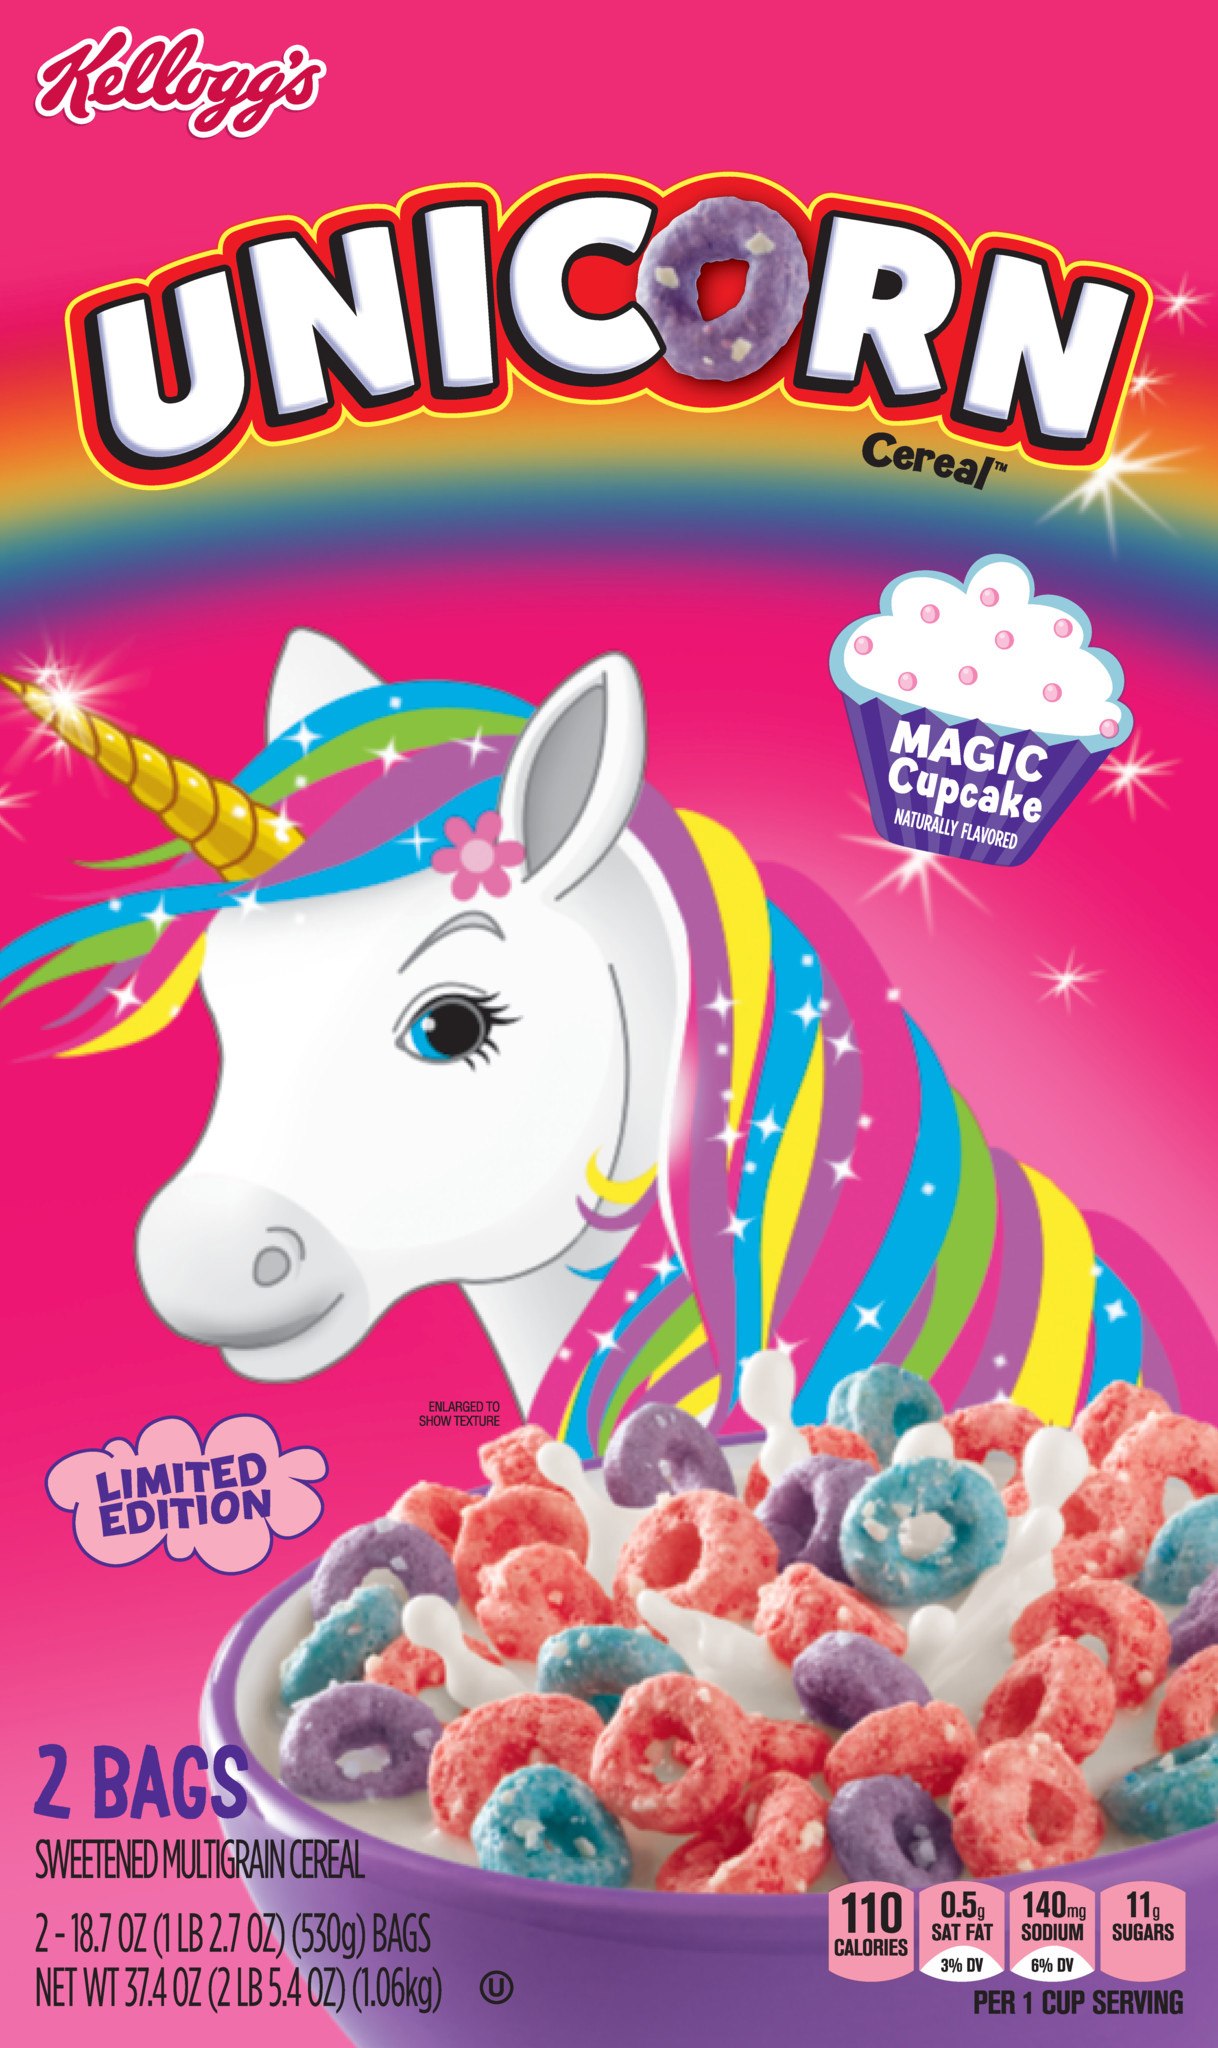 Kellogg's unicorn cereal